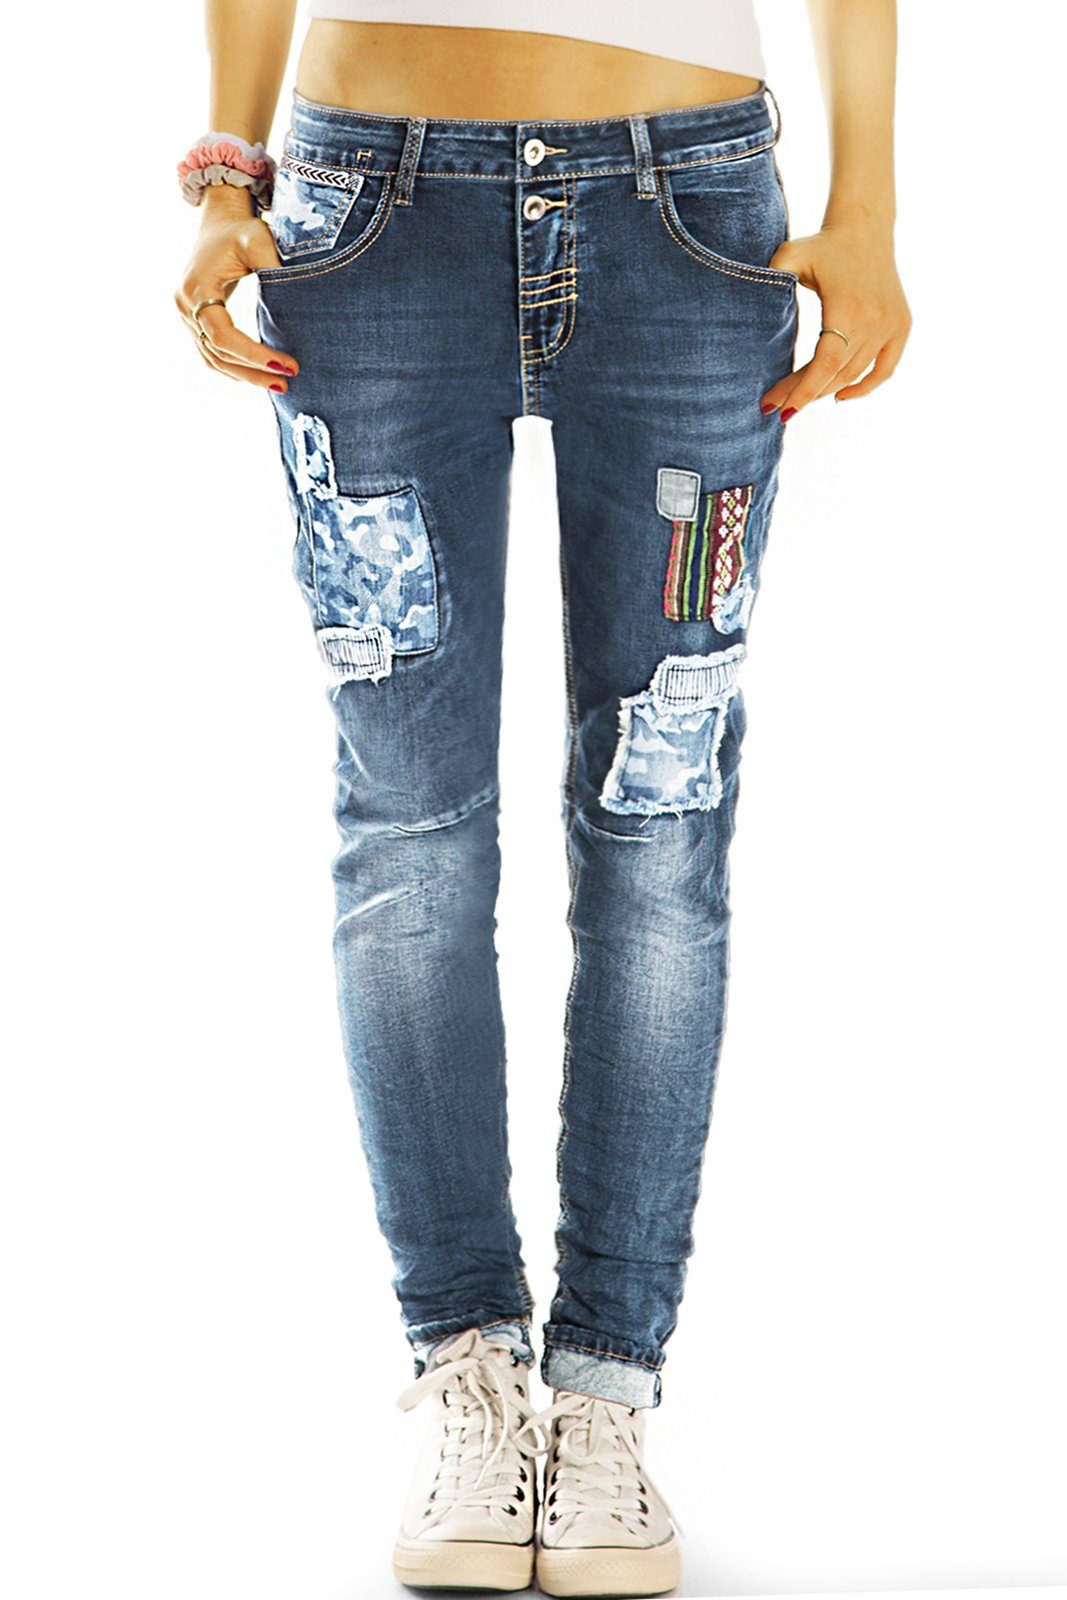 5-Pocket-Style - Designer Hose mit j14L-3 styled Medium Tapered Damen be - Stretchjeans Waist Jeans, Stretch-Anteil, lockere Tapered-fit-Jeans